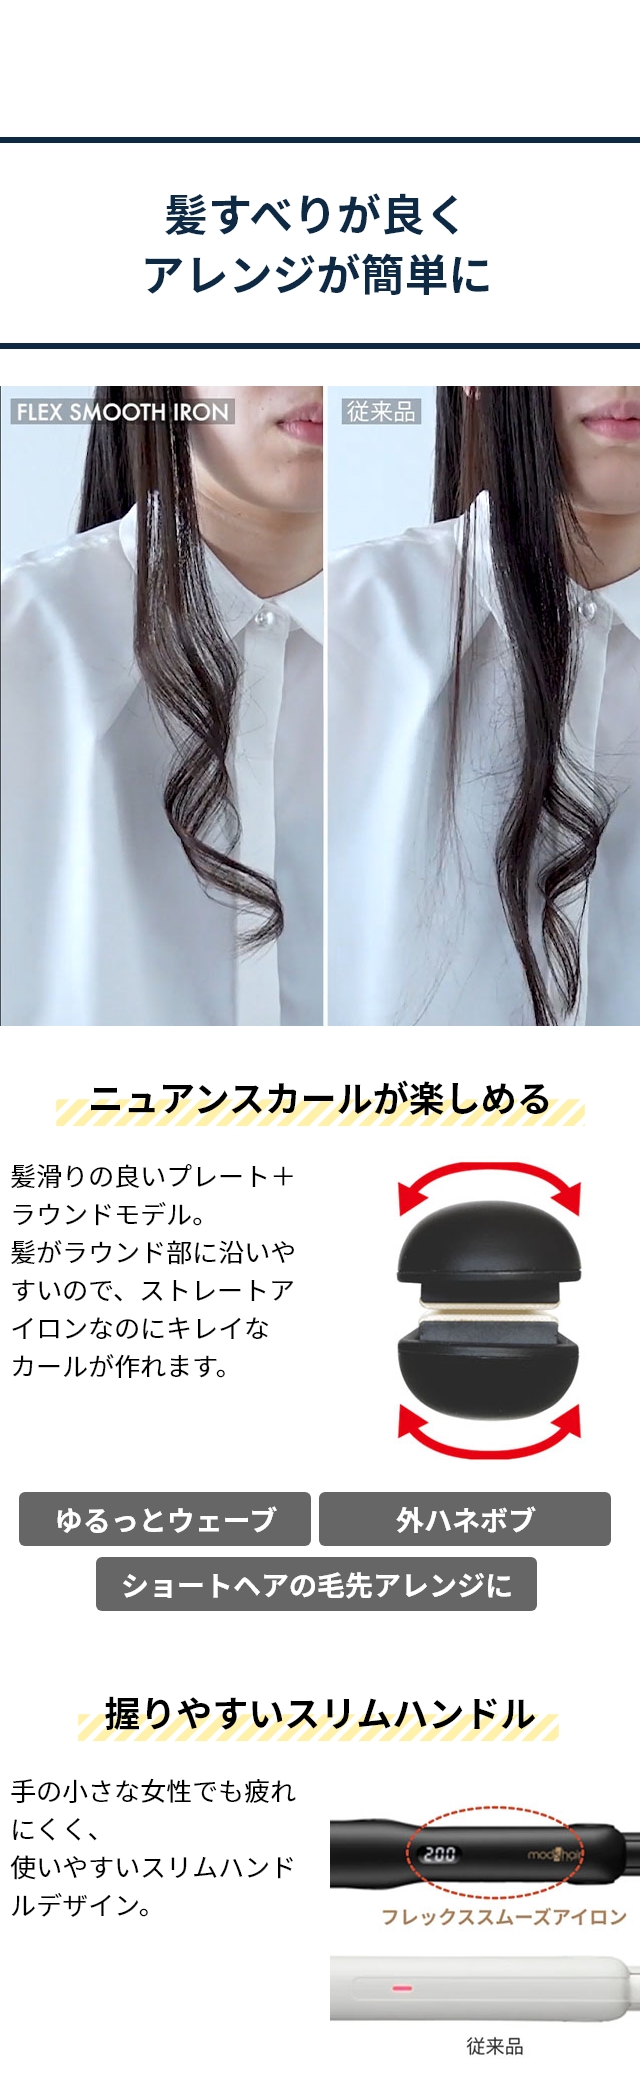 mod's hair (モッズ・ヘア) アドバンス フレックス スムーズアイロン MHS-3057